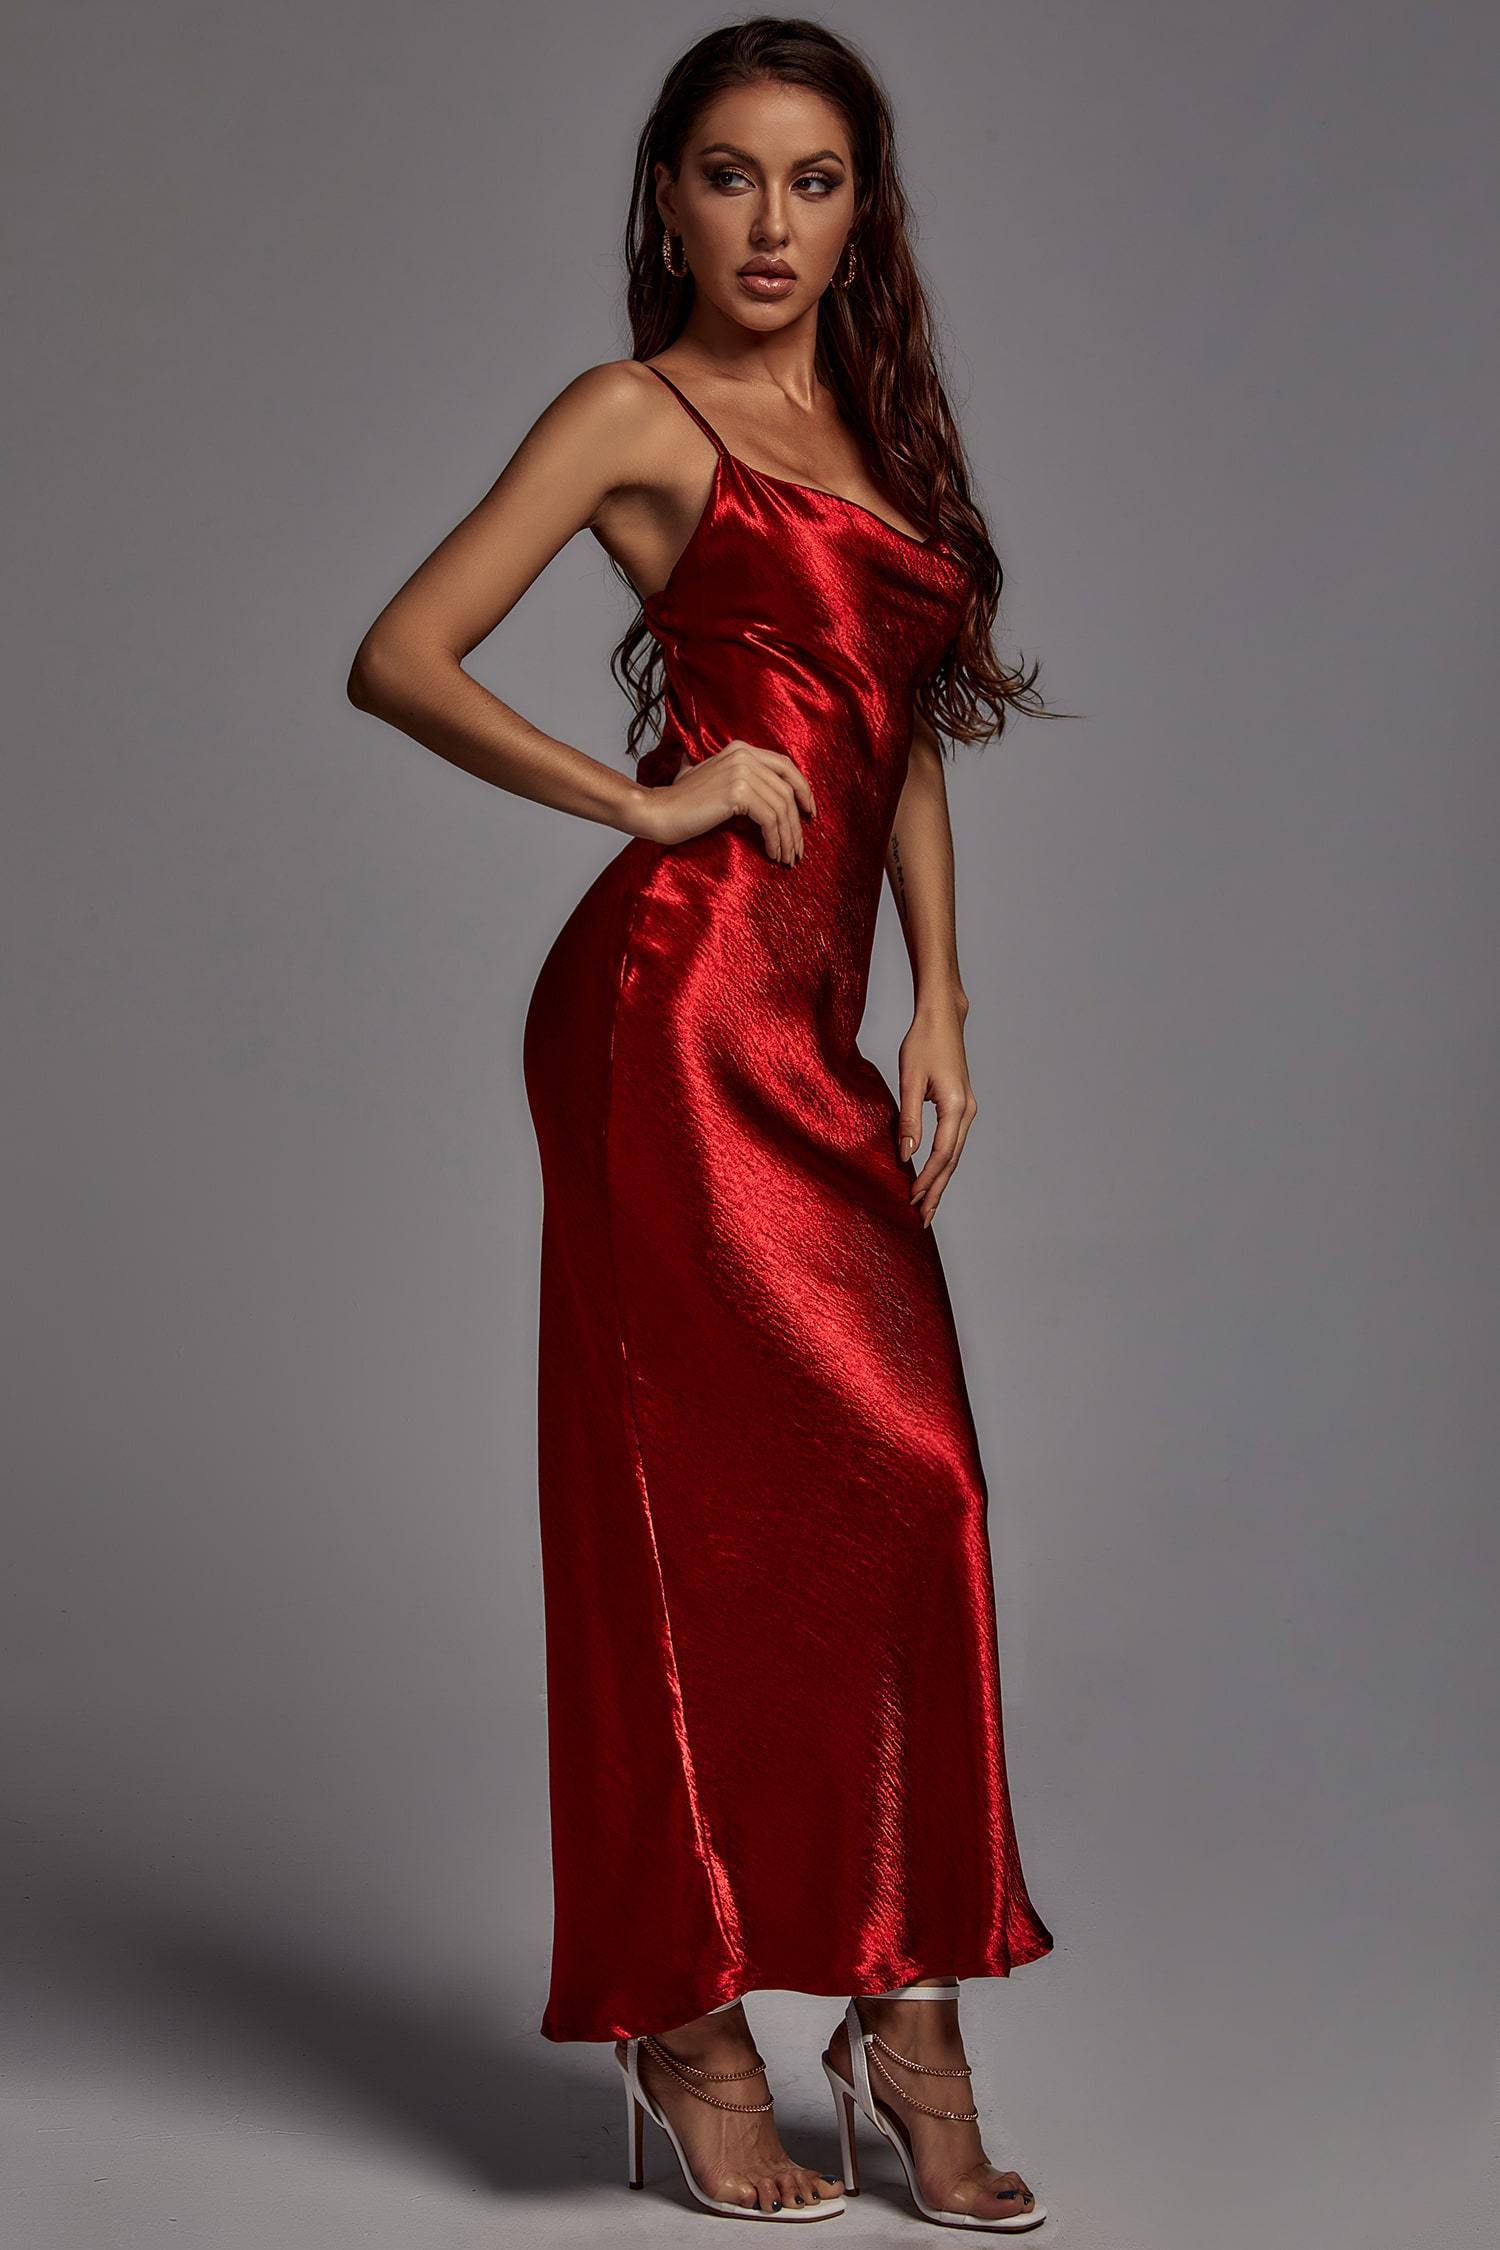 Belle Red Corset Dress Satin Dress Mini Dress for Red Carpet